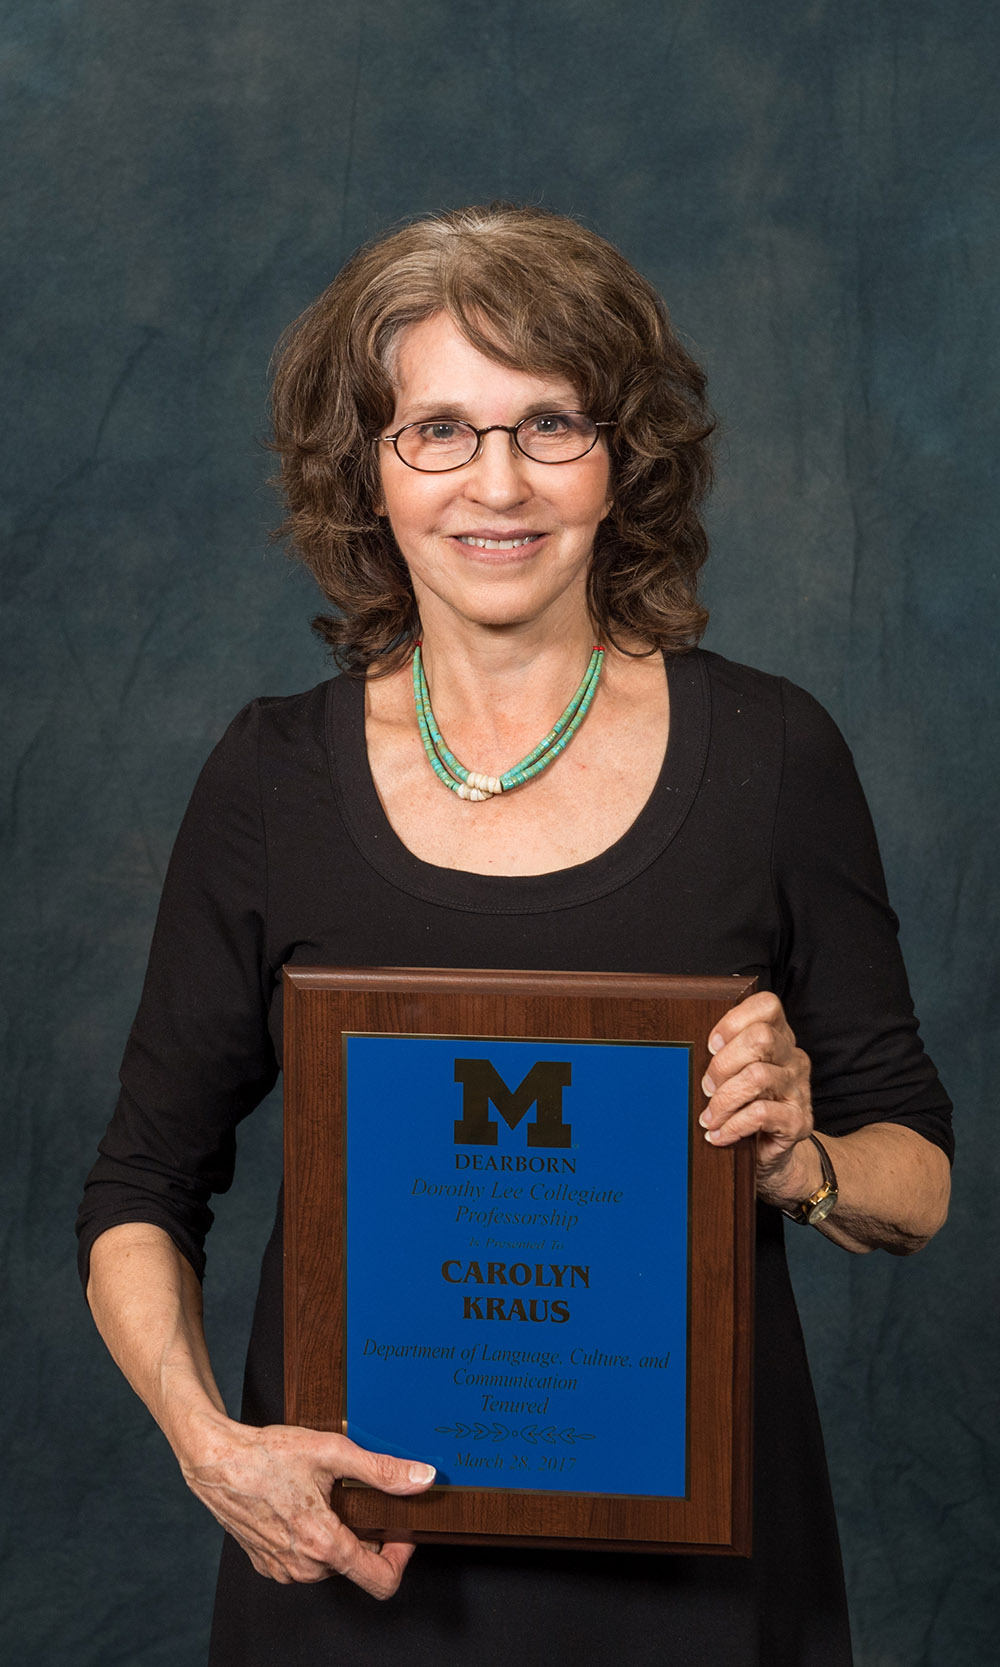 Carolyn Kraus holding an award